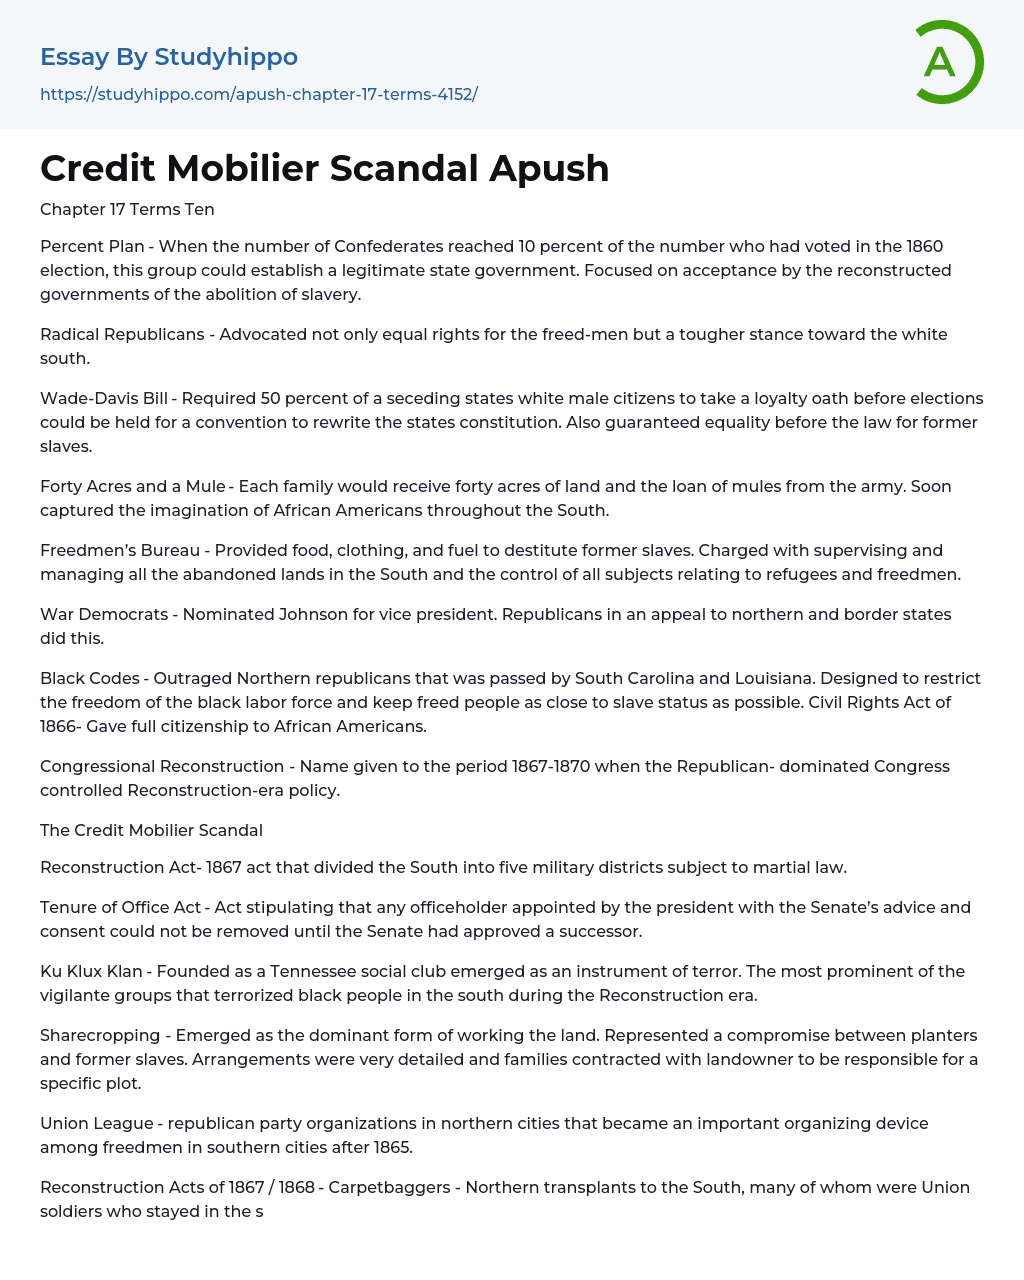 Credit Mobilier Scandal Apush Essay Example